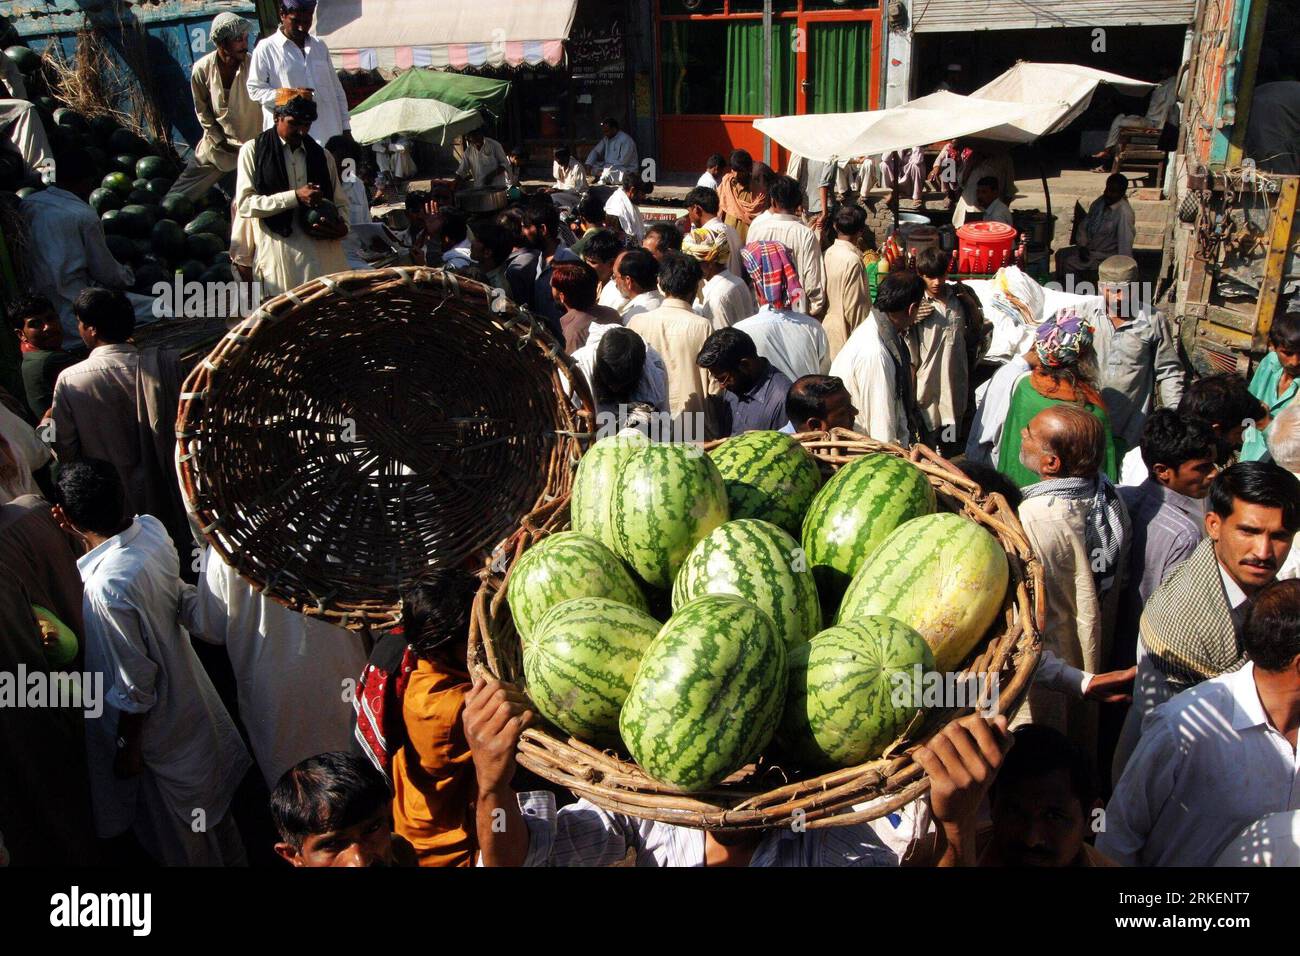 Bildnummer: 55280232  Datum: 21.04.2011  Copyright: imago/Xinhua (110421) -- LAHORE, April 21, 2011 (Xinhua) -- A Pakistani farmer carries a basket of watermelons at a fruit market in eastern Pakistan s Lahore, on April 21, 2011. (Xinhua/Jamil Ahmed) (lyi) PAKISTAN-LAHORE-WATERMELON PUBLICATIONxNOTxINxCHN Gesellschaft Wirtschaft Markt Wassermelone Wassermelonen Melone Melonen kbdig xsk 2011 quer     Bildnummer 55280232 Date 21 04 2011 Copyright Imago XINHUA  Lahore April 21 2011 XINHUA a Pakistani Farmer carries a Basketball of Watermelons AT a Fruit Market in Eastern Pakistan S Lahore ON Apri Stock Photo